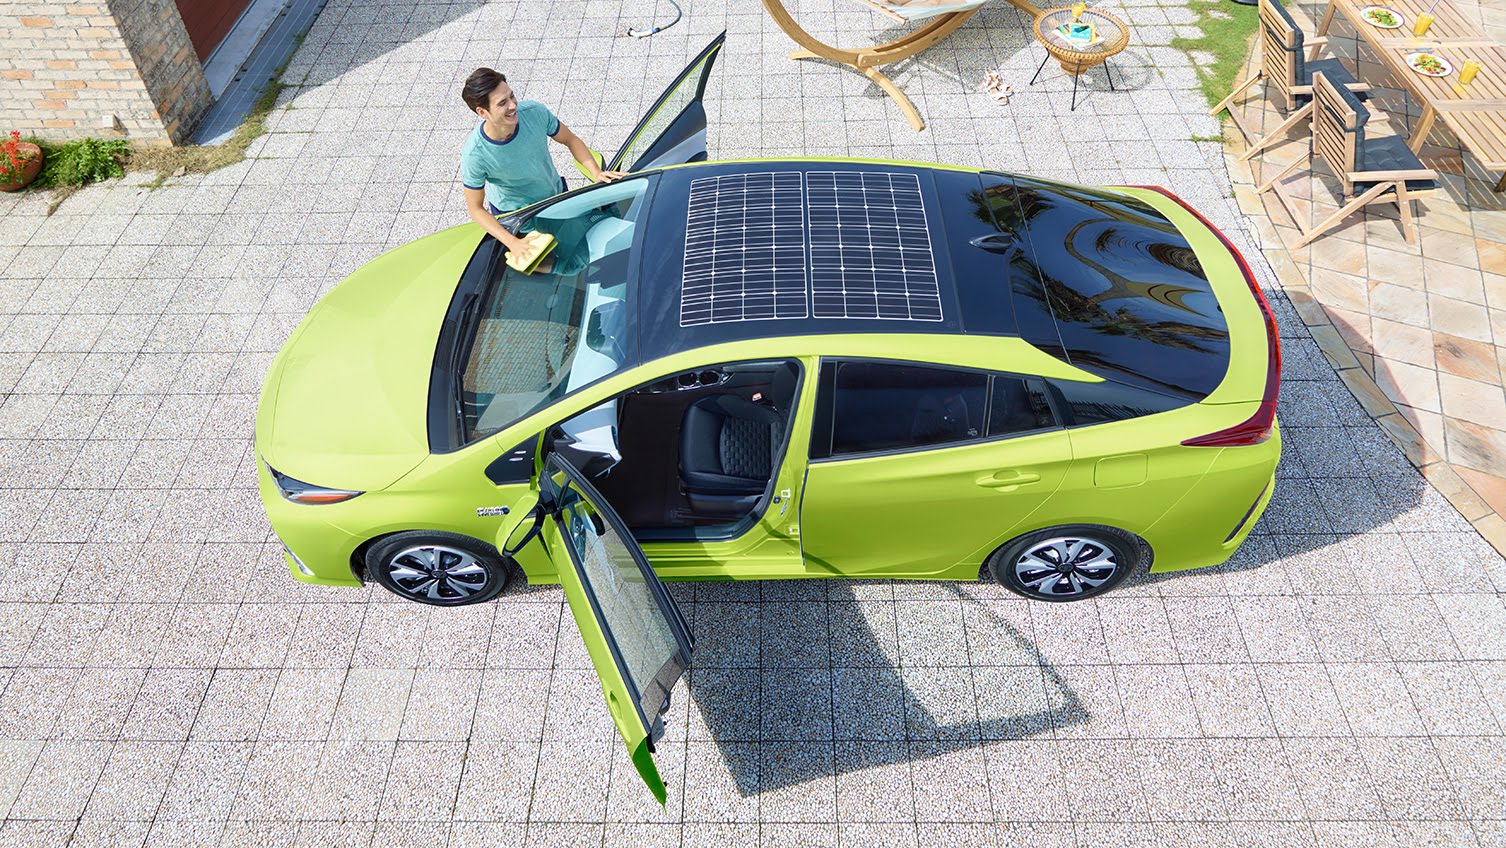 Toyota creates car powered by solar panels - Hitecher